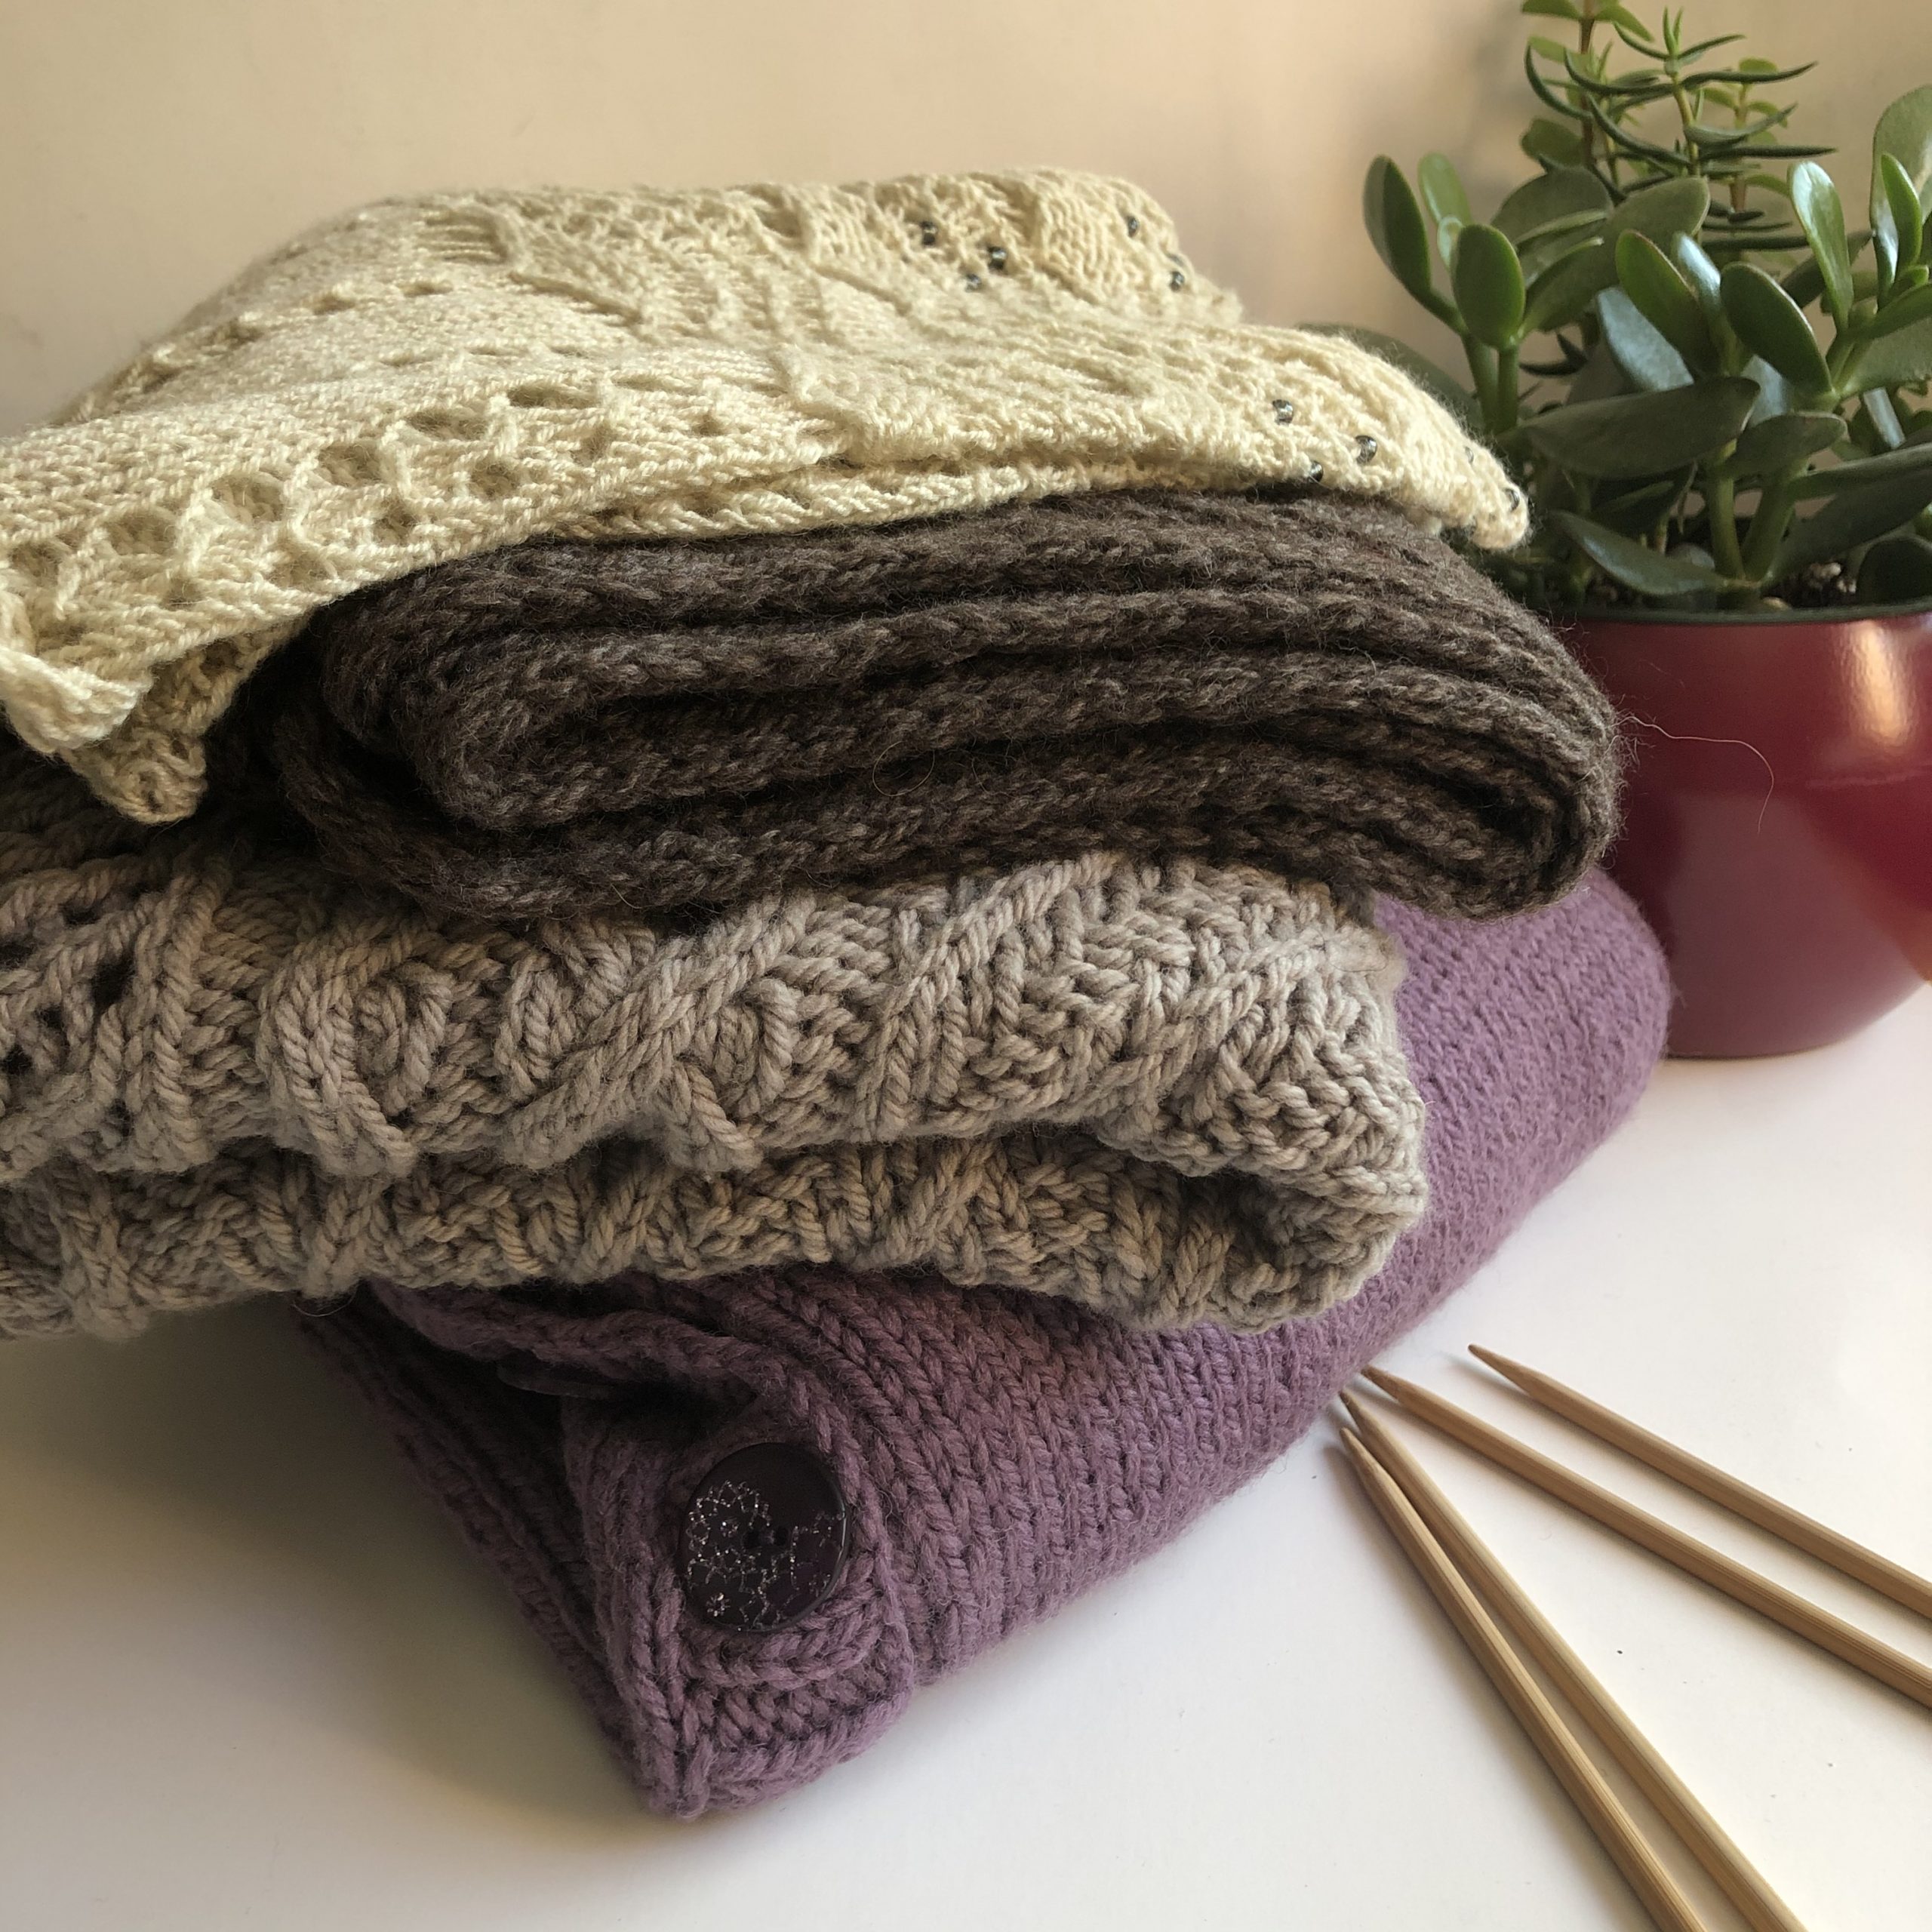 12 alternative ideas for novelty yarn — Sum of their Stories Craft